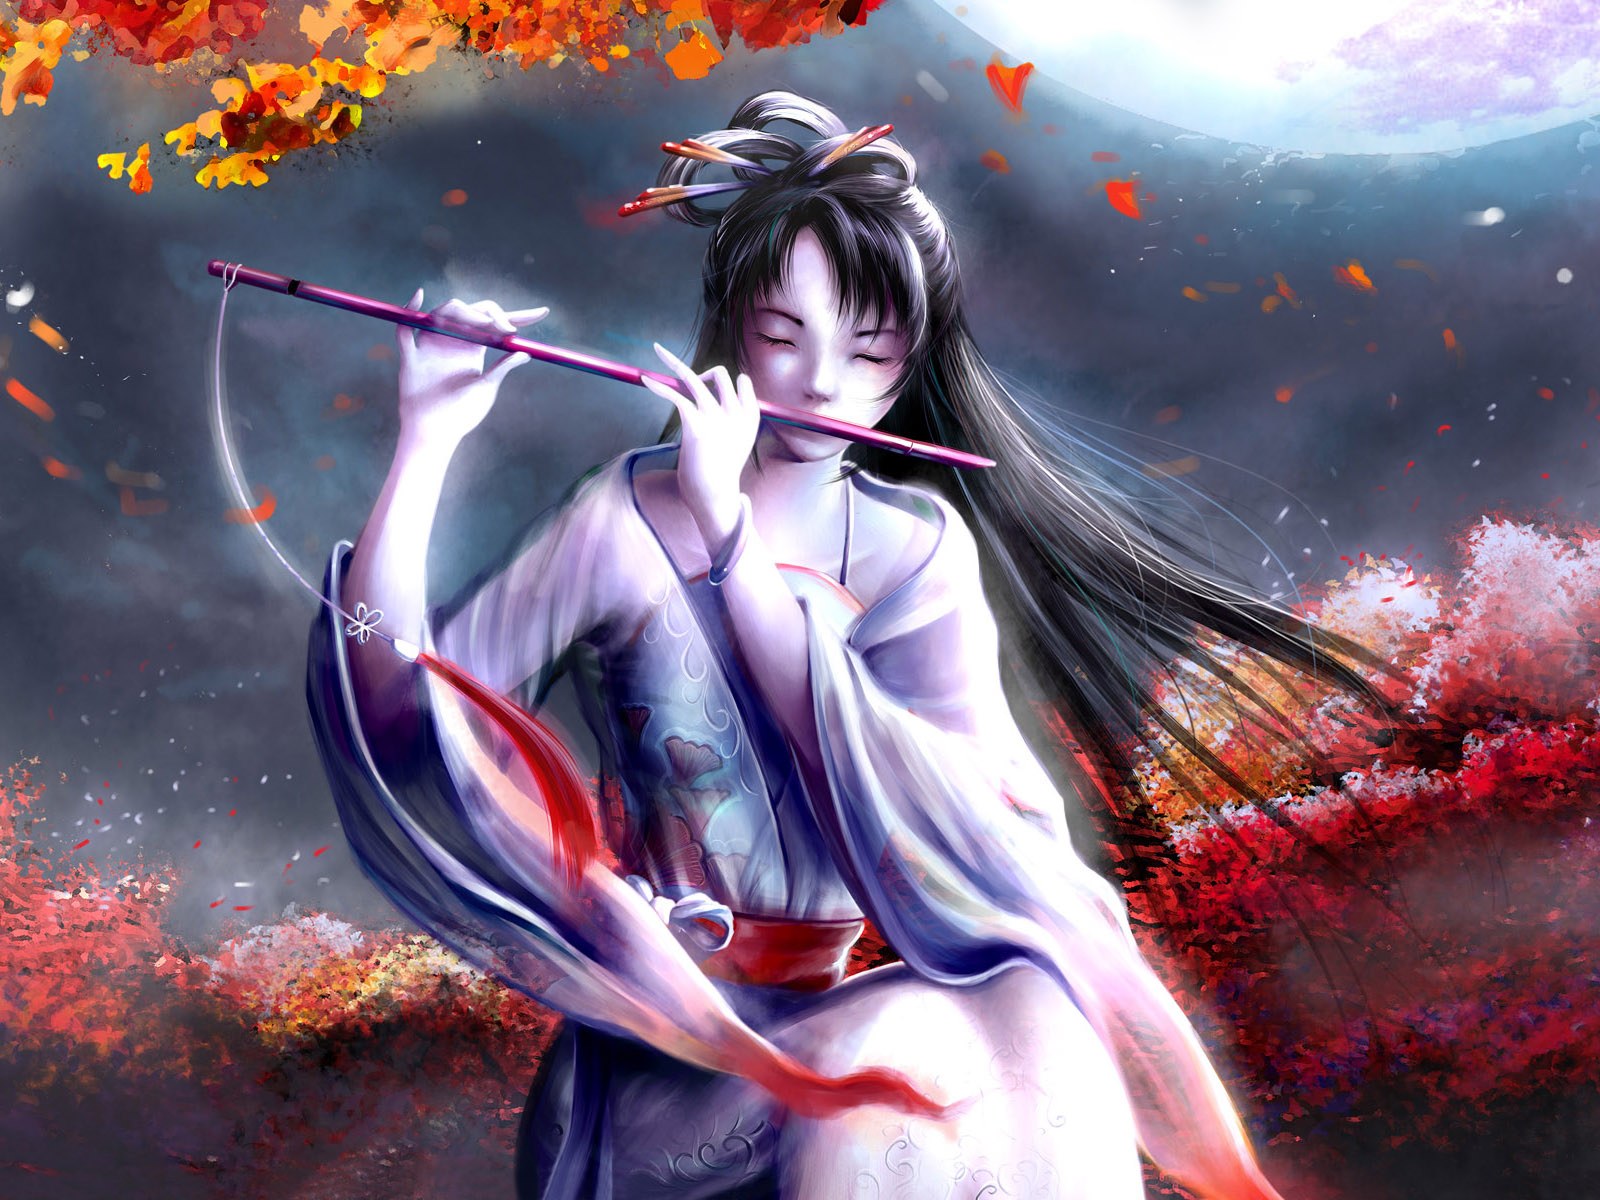 Great Anime Wallpaper Beautiful Japanese Girl With Flute Fantasy Artwork Digital Art Cg Hd Quality Anime Wallpaper